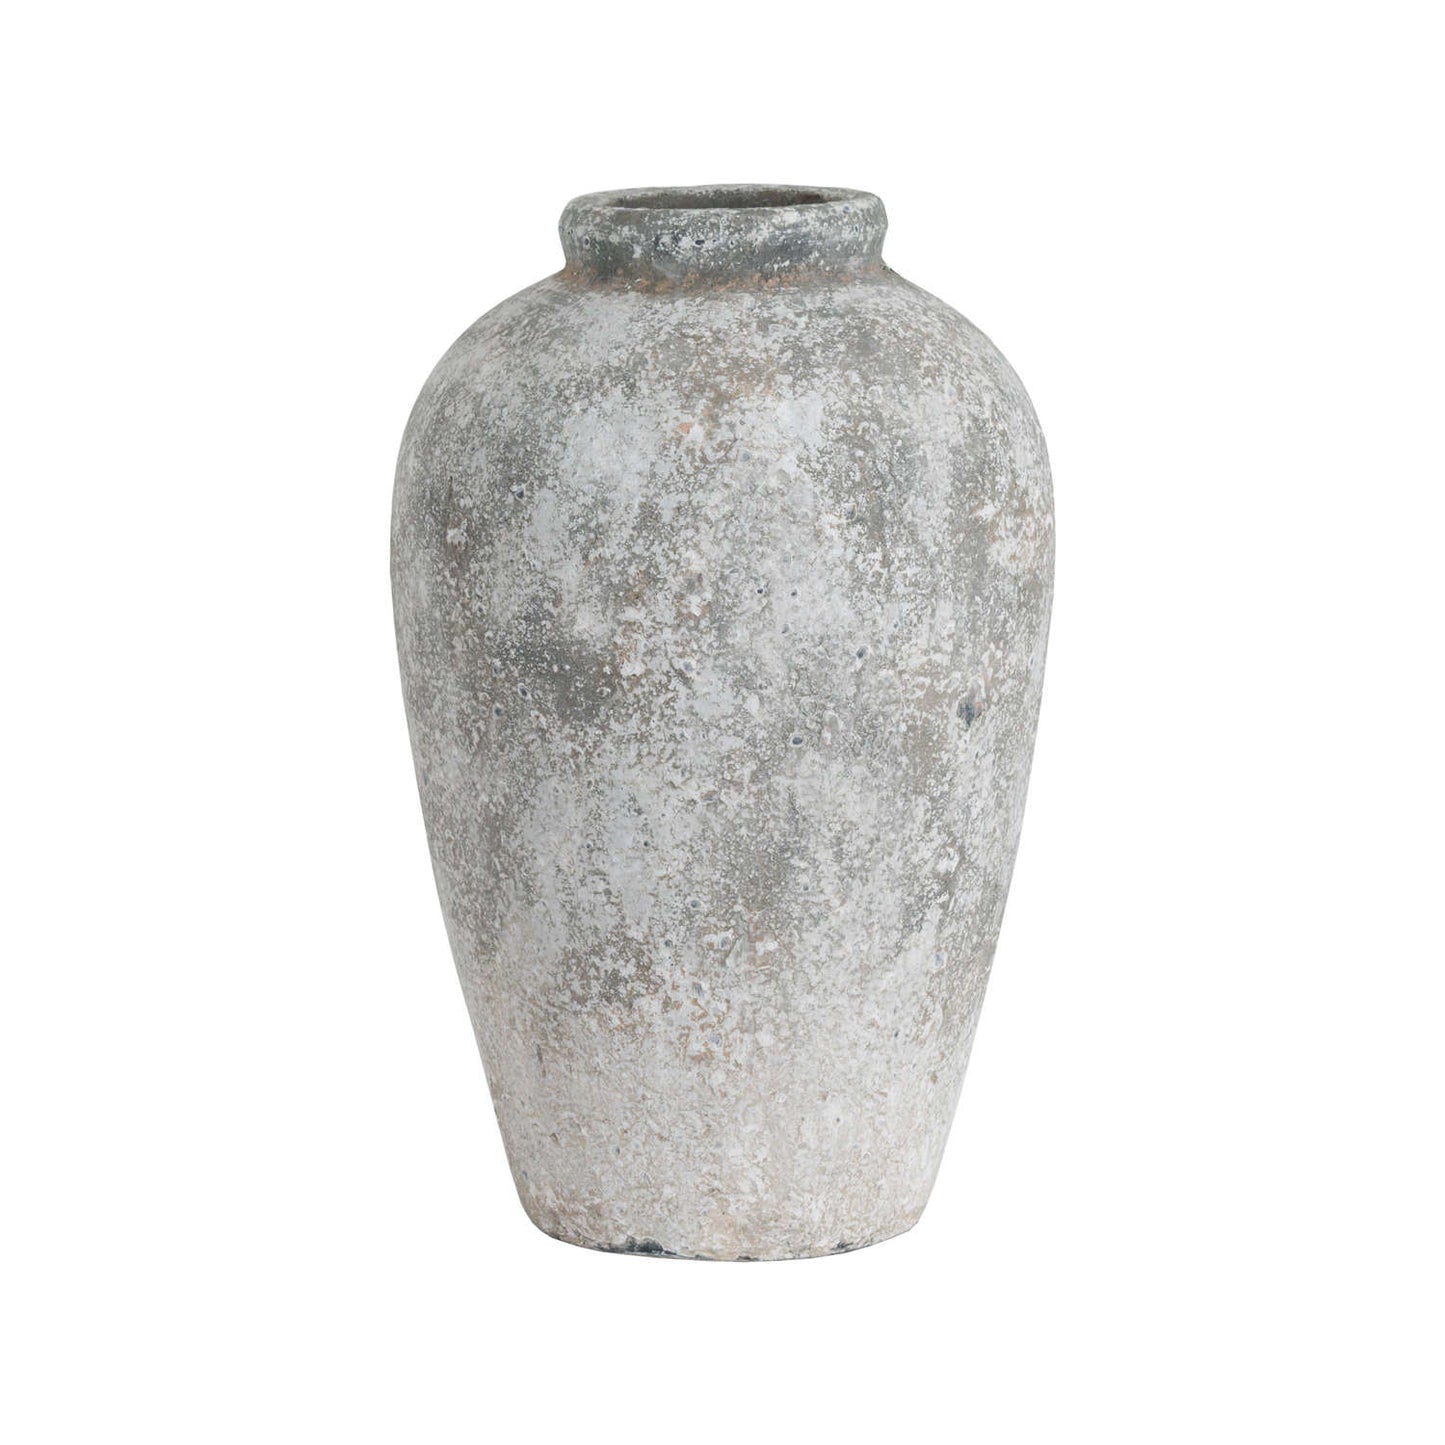 This Aged Stone Tall Ceramic Vase